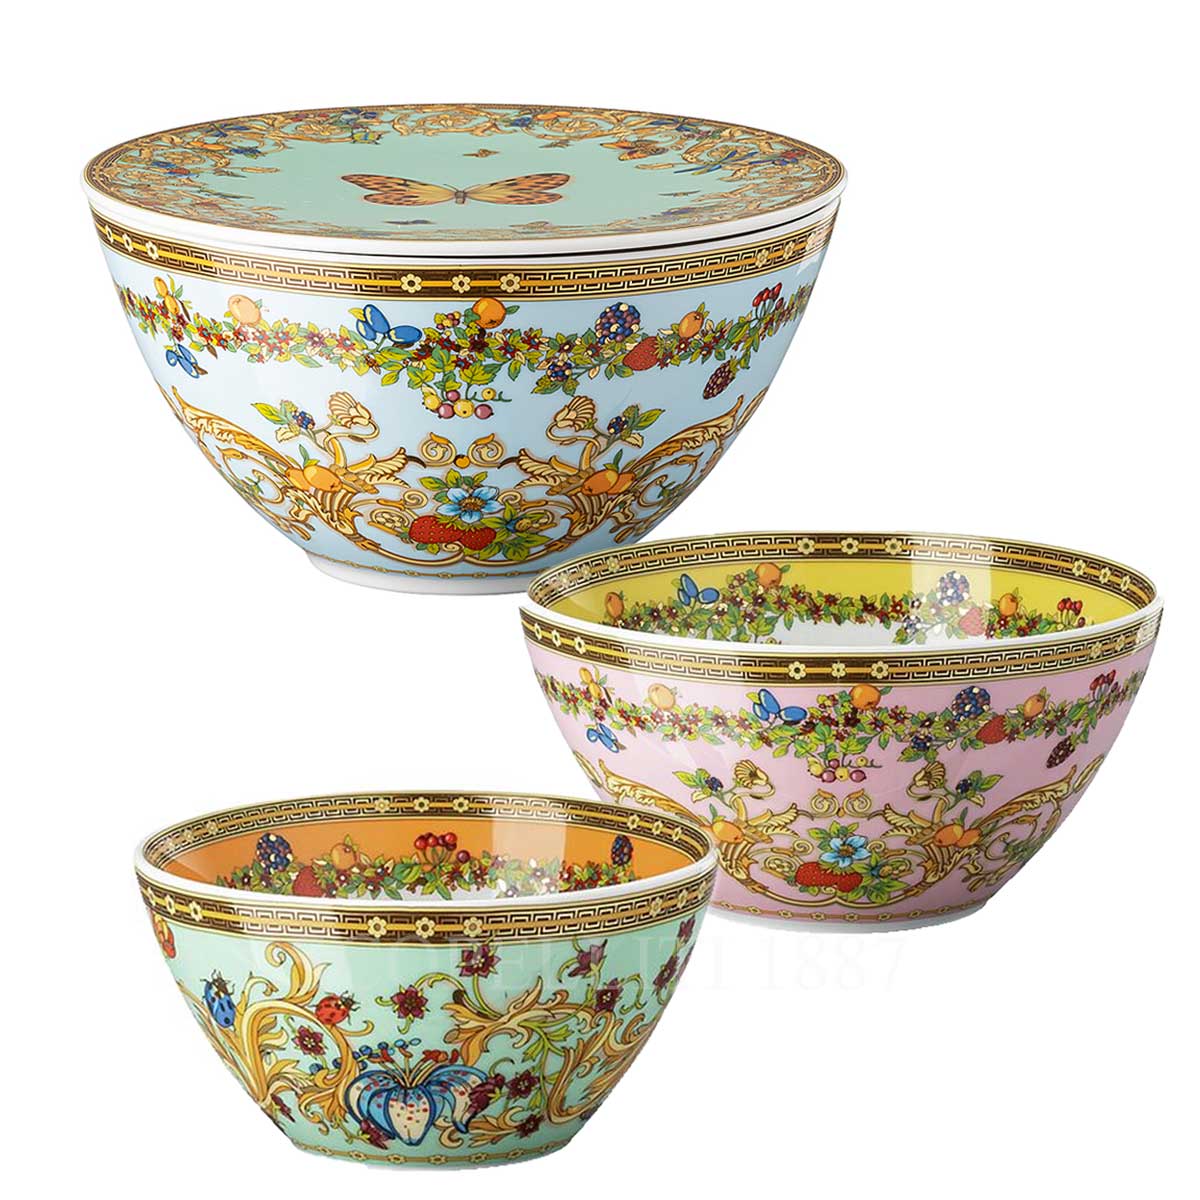 Turkish Ceramic Handmade Bowl Set Of Six - 8 cm (3.2